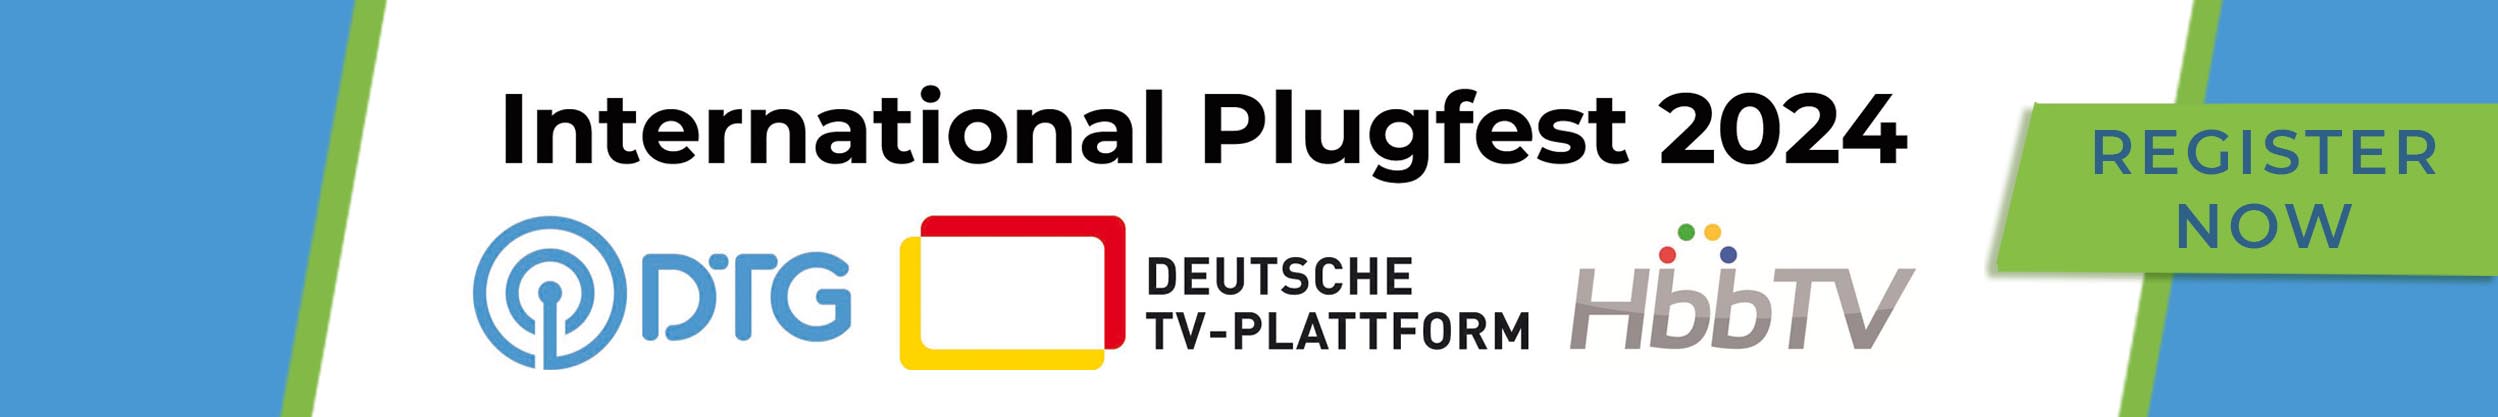 International Plugfest 2024